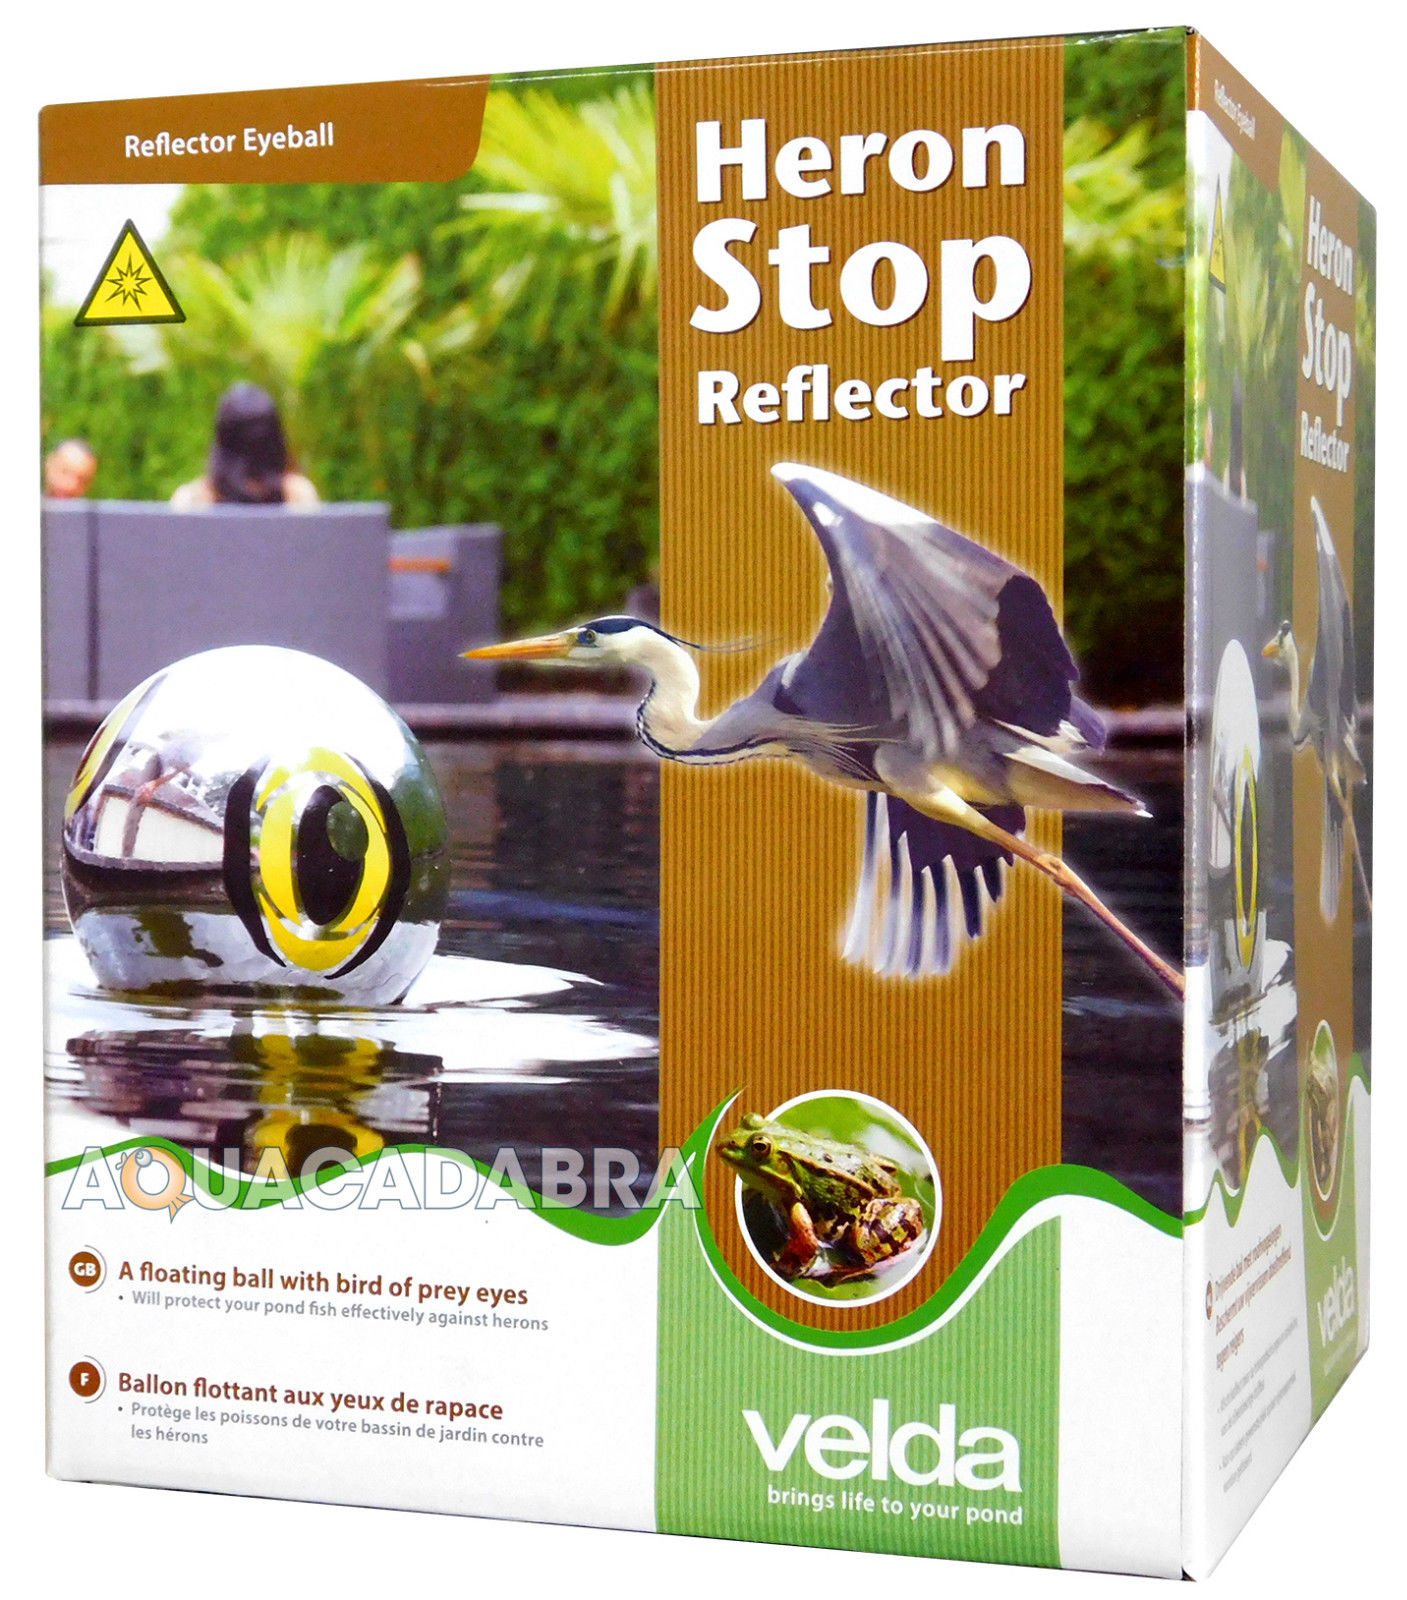 VELDA STOP REFLECTOR BALL FLOATING HERON SCARER EYE CAT BIRD POND